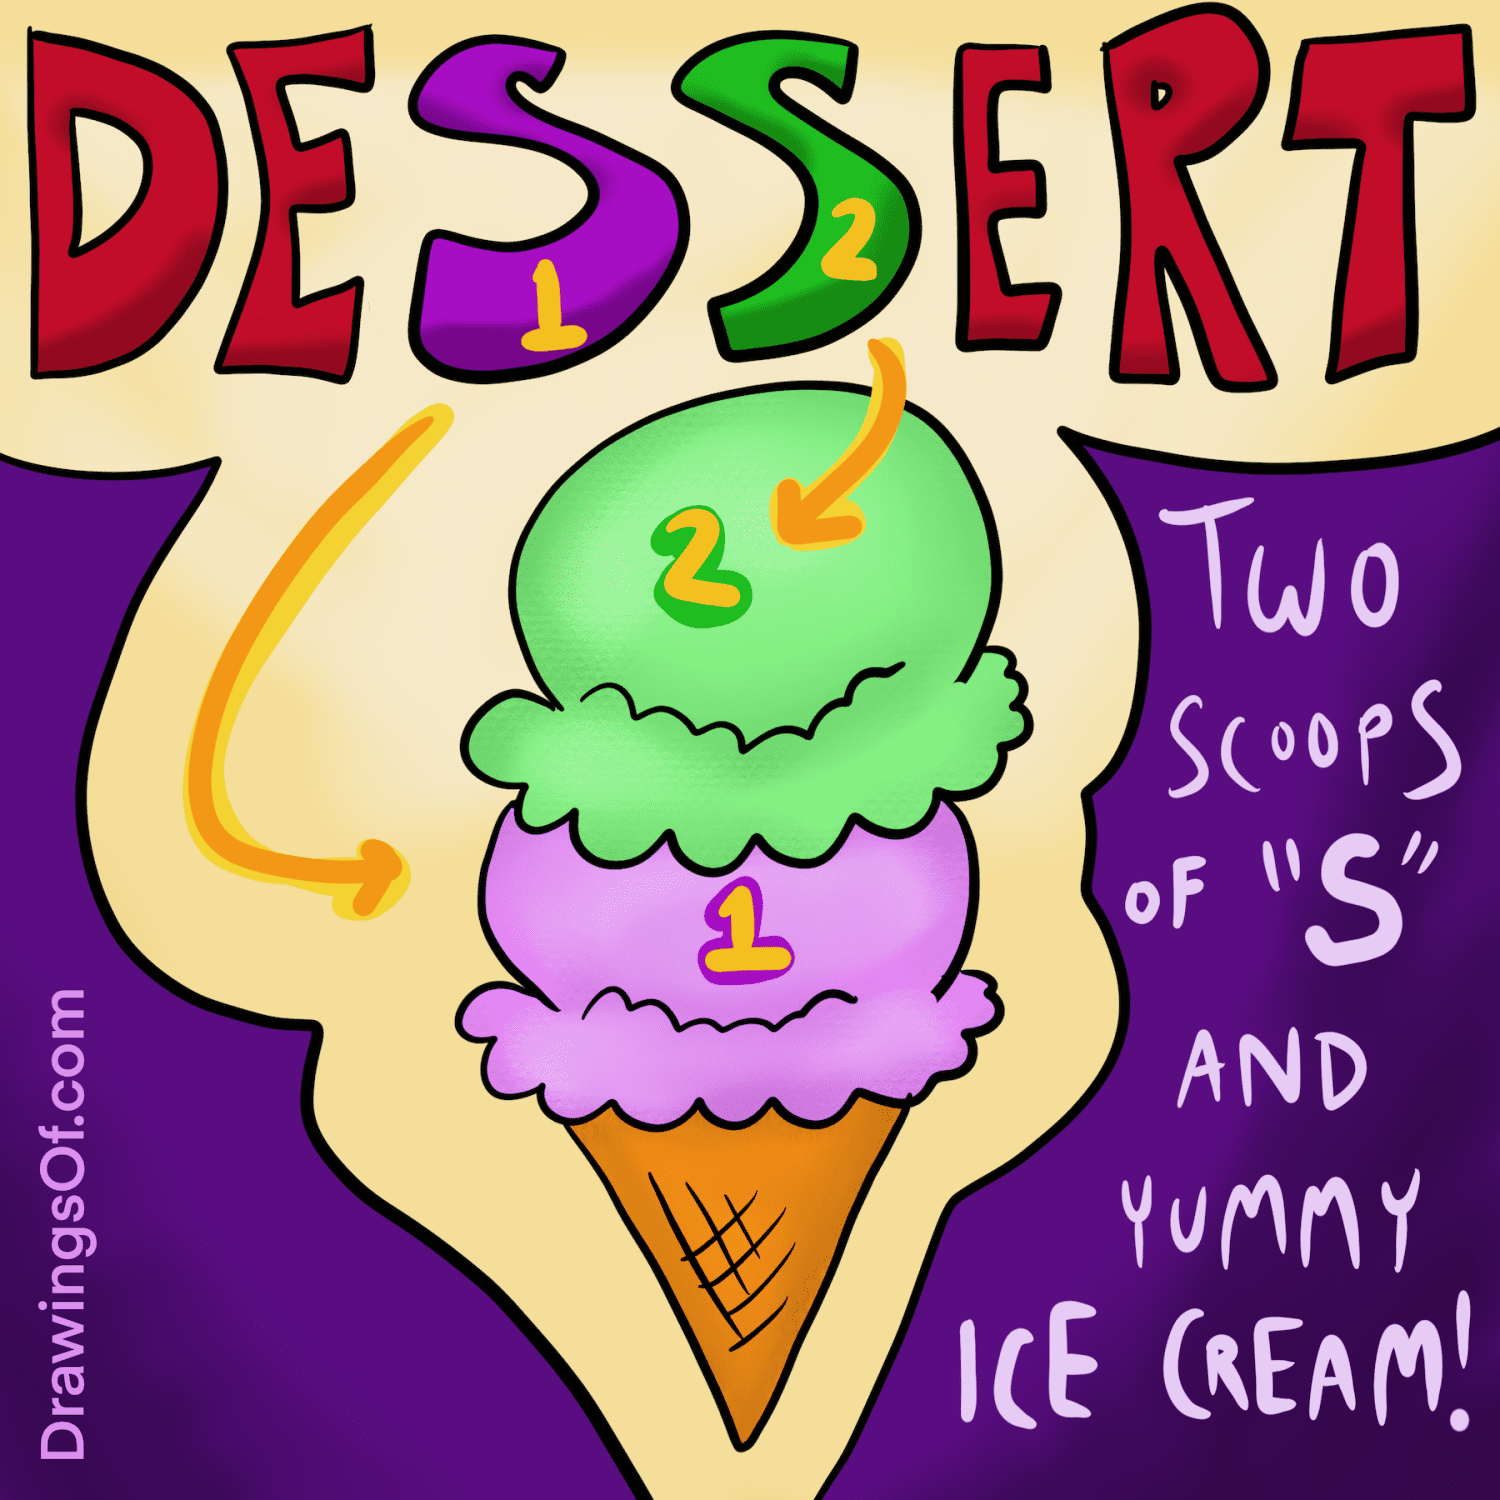 Dessert spelling